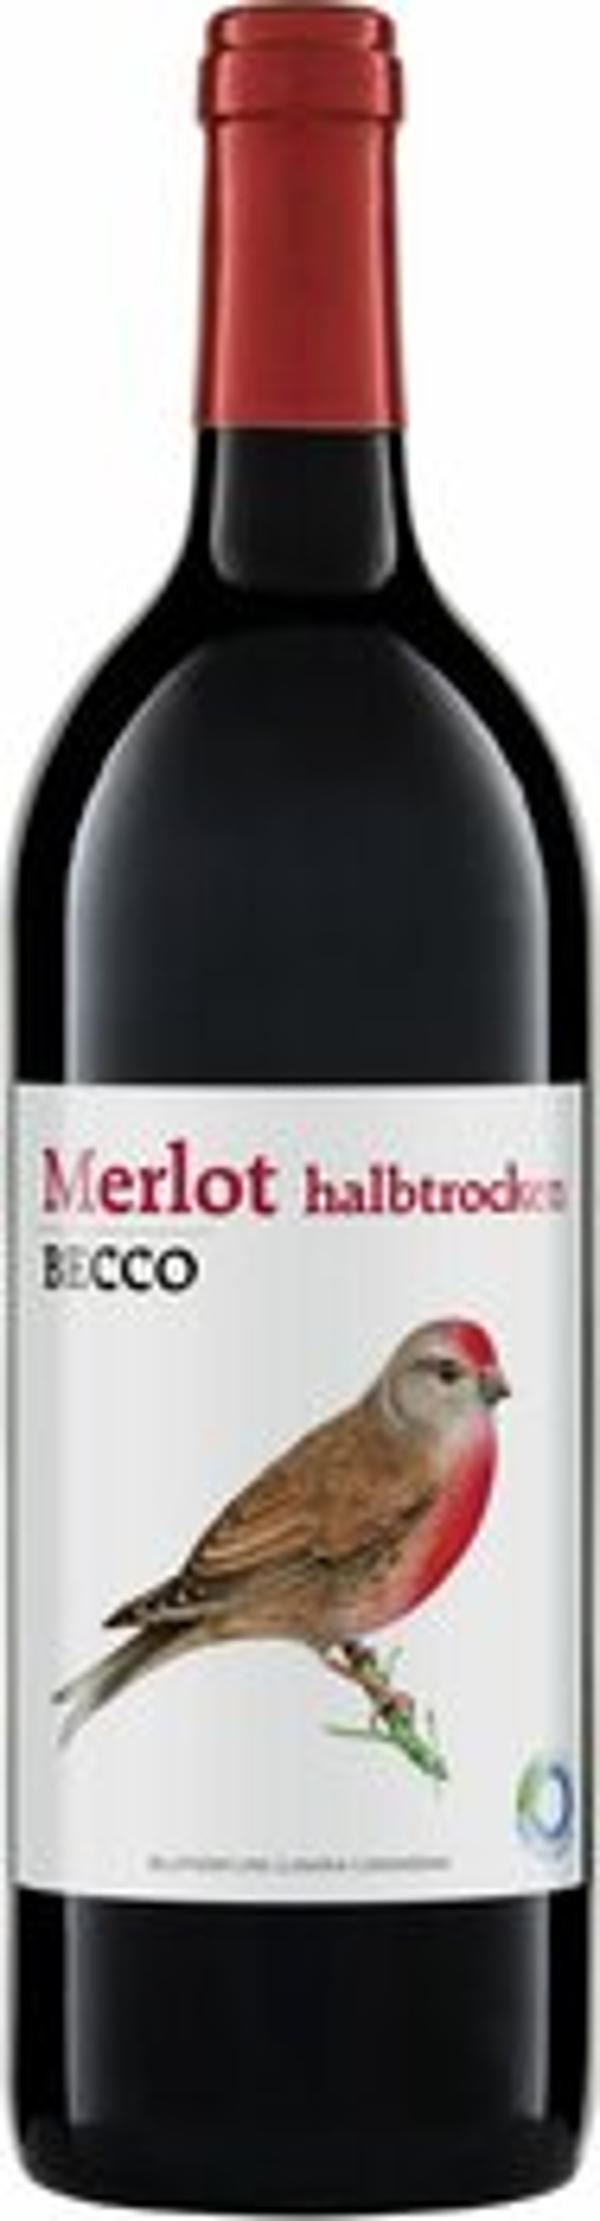 Produktfoto zu Becco Merlot halbtrocken rot, 1 l